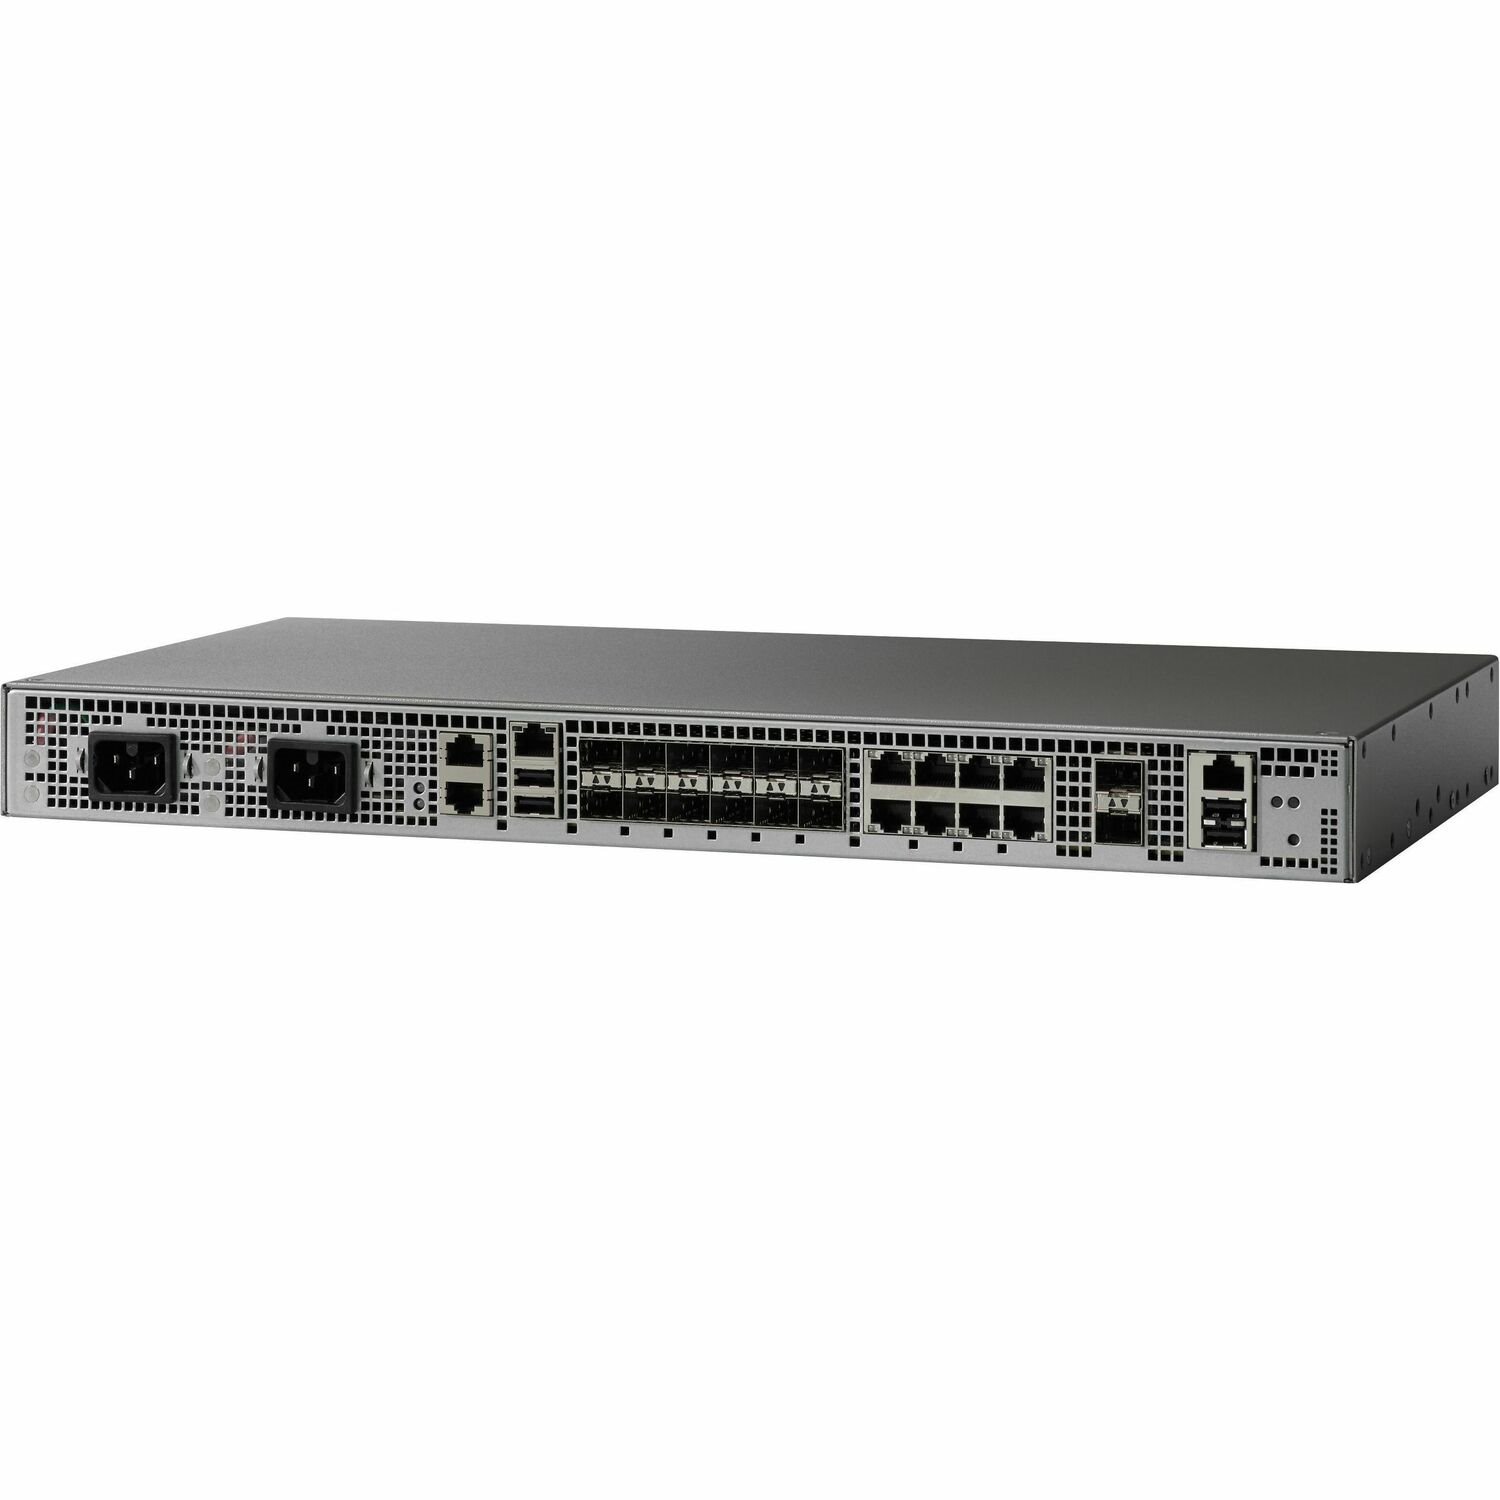 Cisco ASR 920 ASR-920-12CZ-A Router - Refurbished